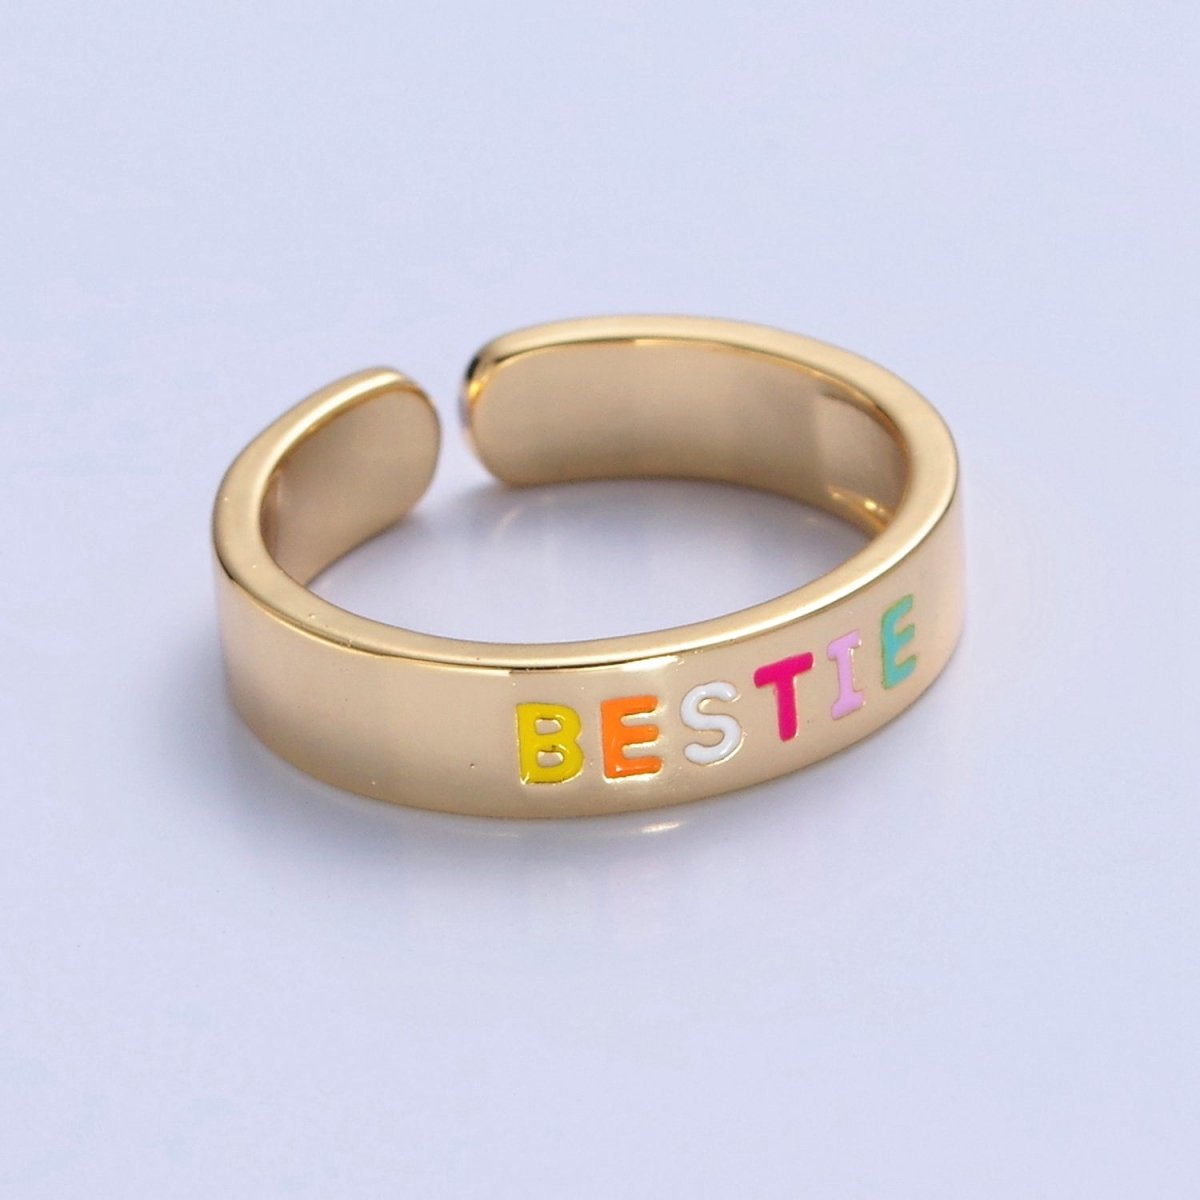 Gold Bestie Ring Open Adjustable Jewelry for Best Friend Gift O-2205 - DLUXCA